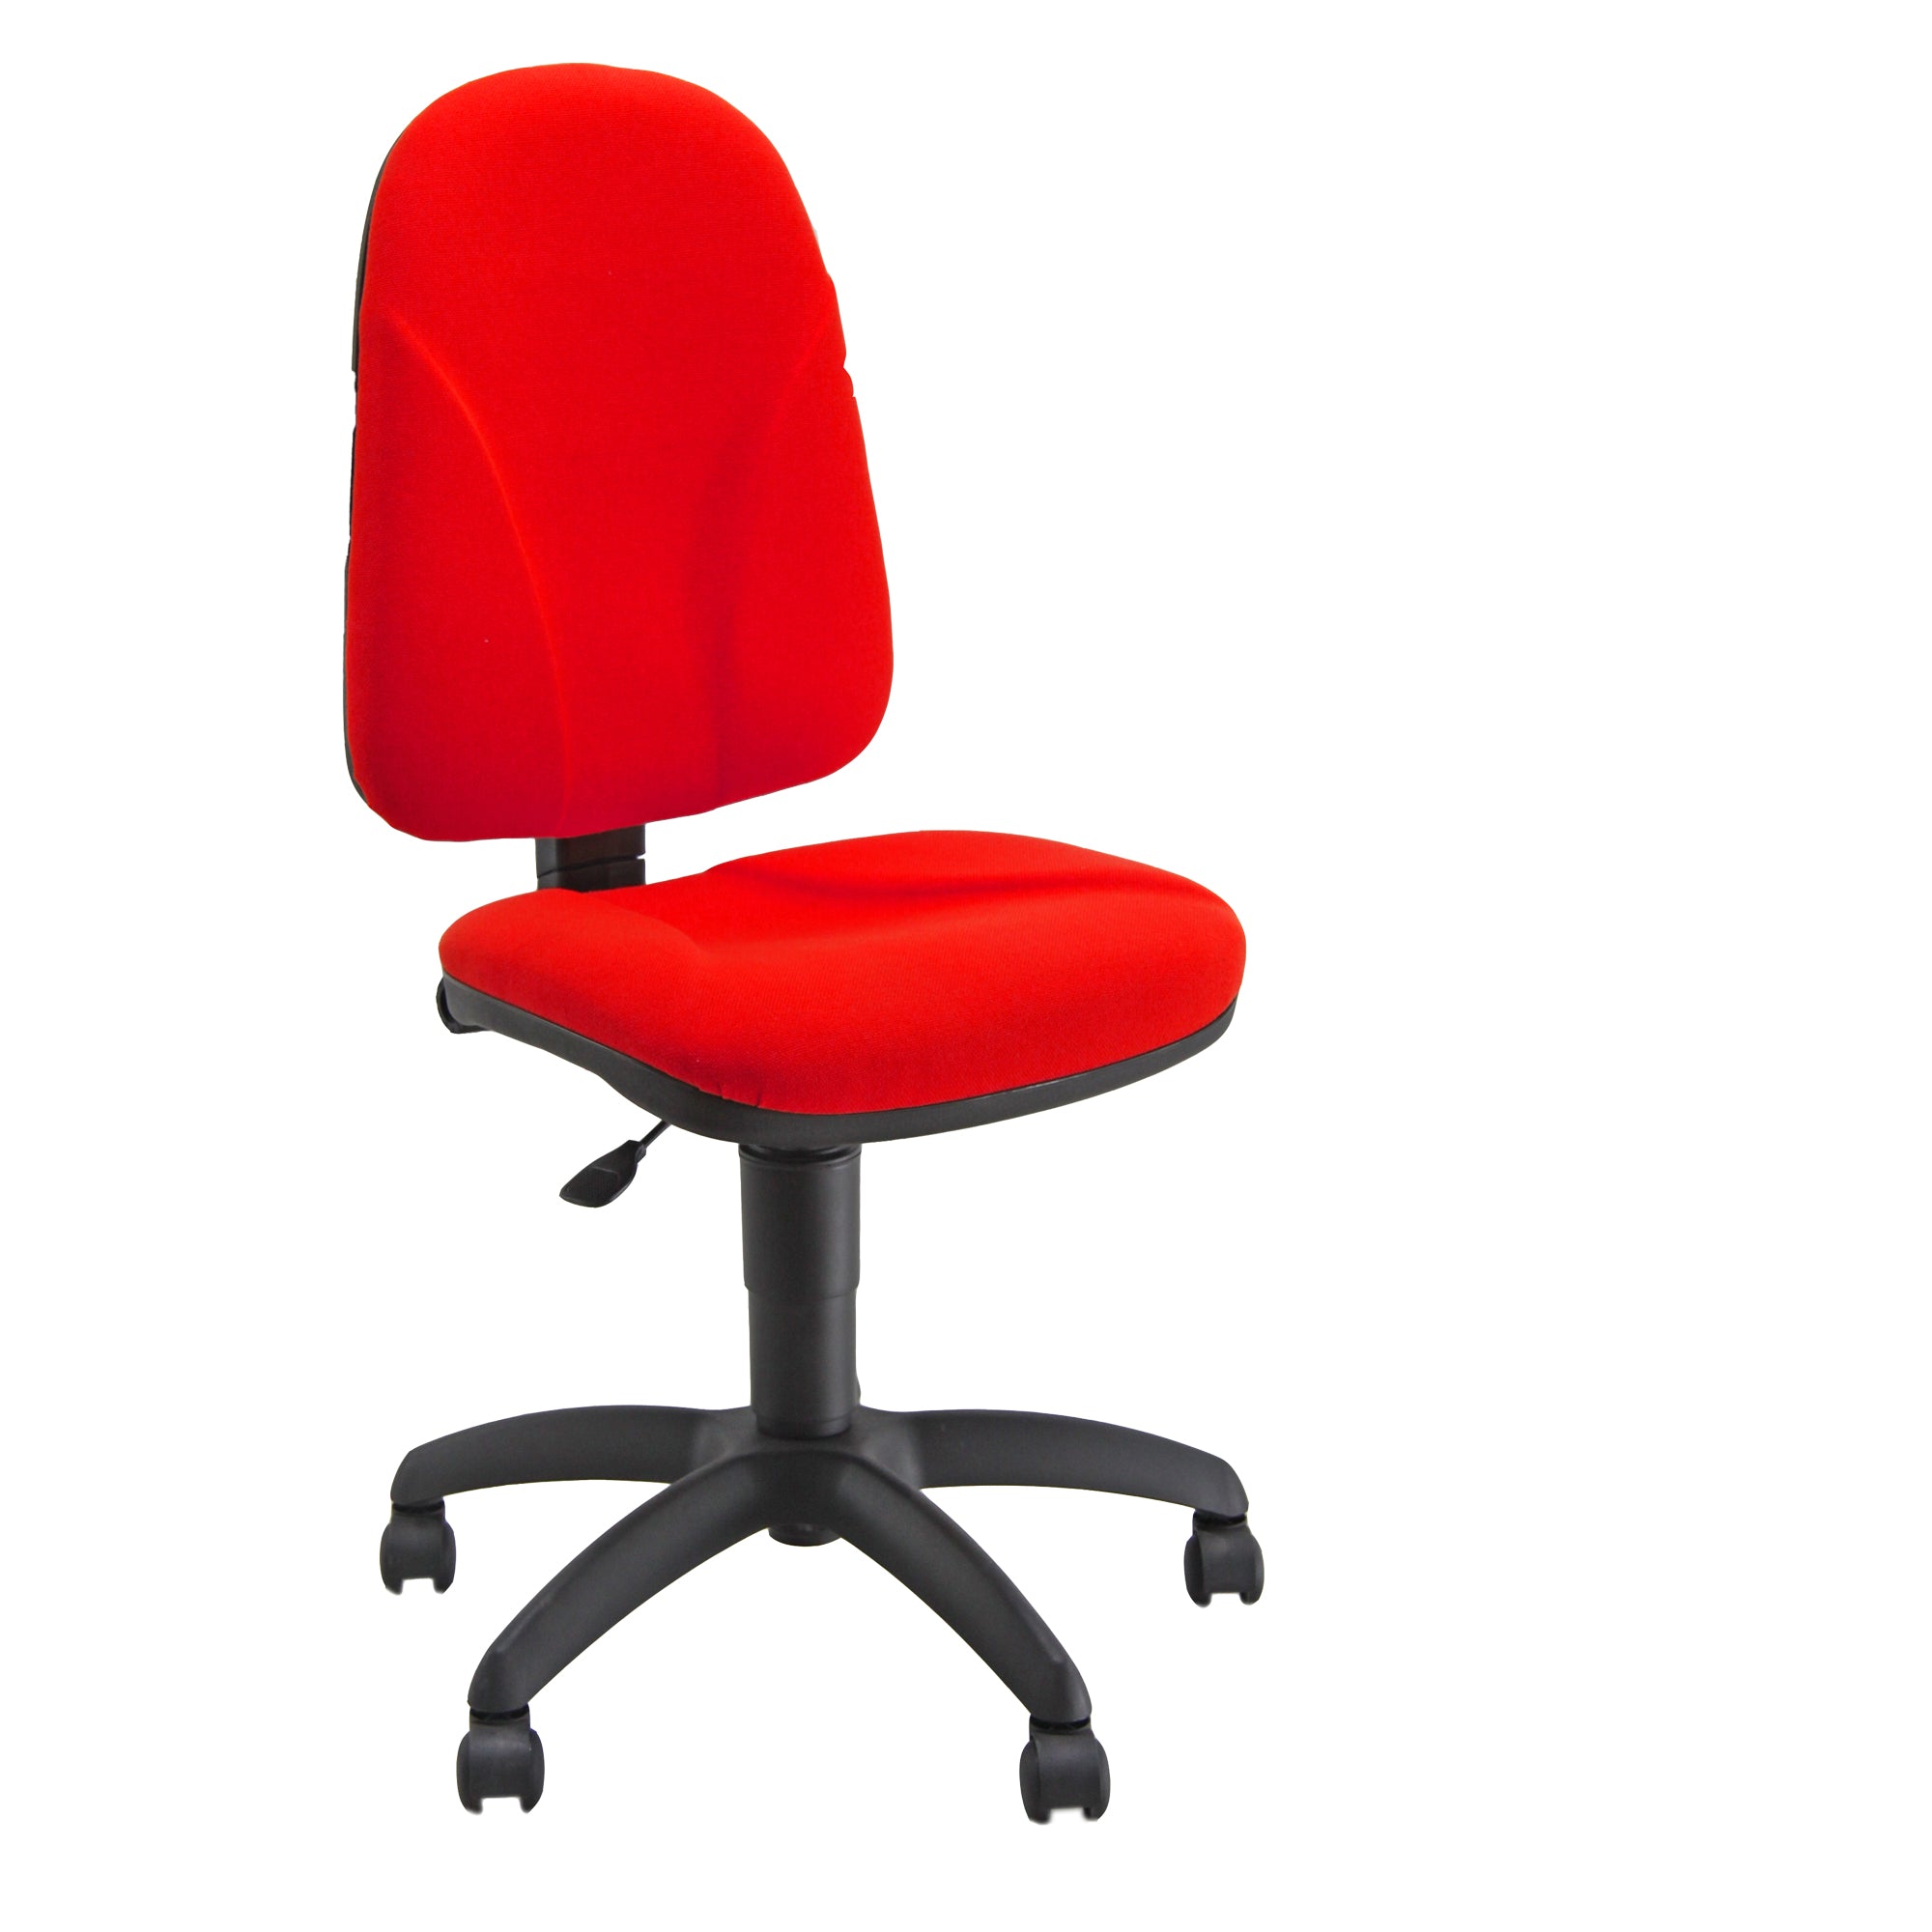 unisit-sedia-operativa-tmtmi-no-flame-rosso-senza-braccioli